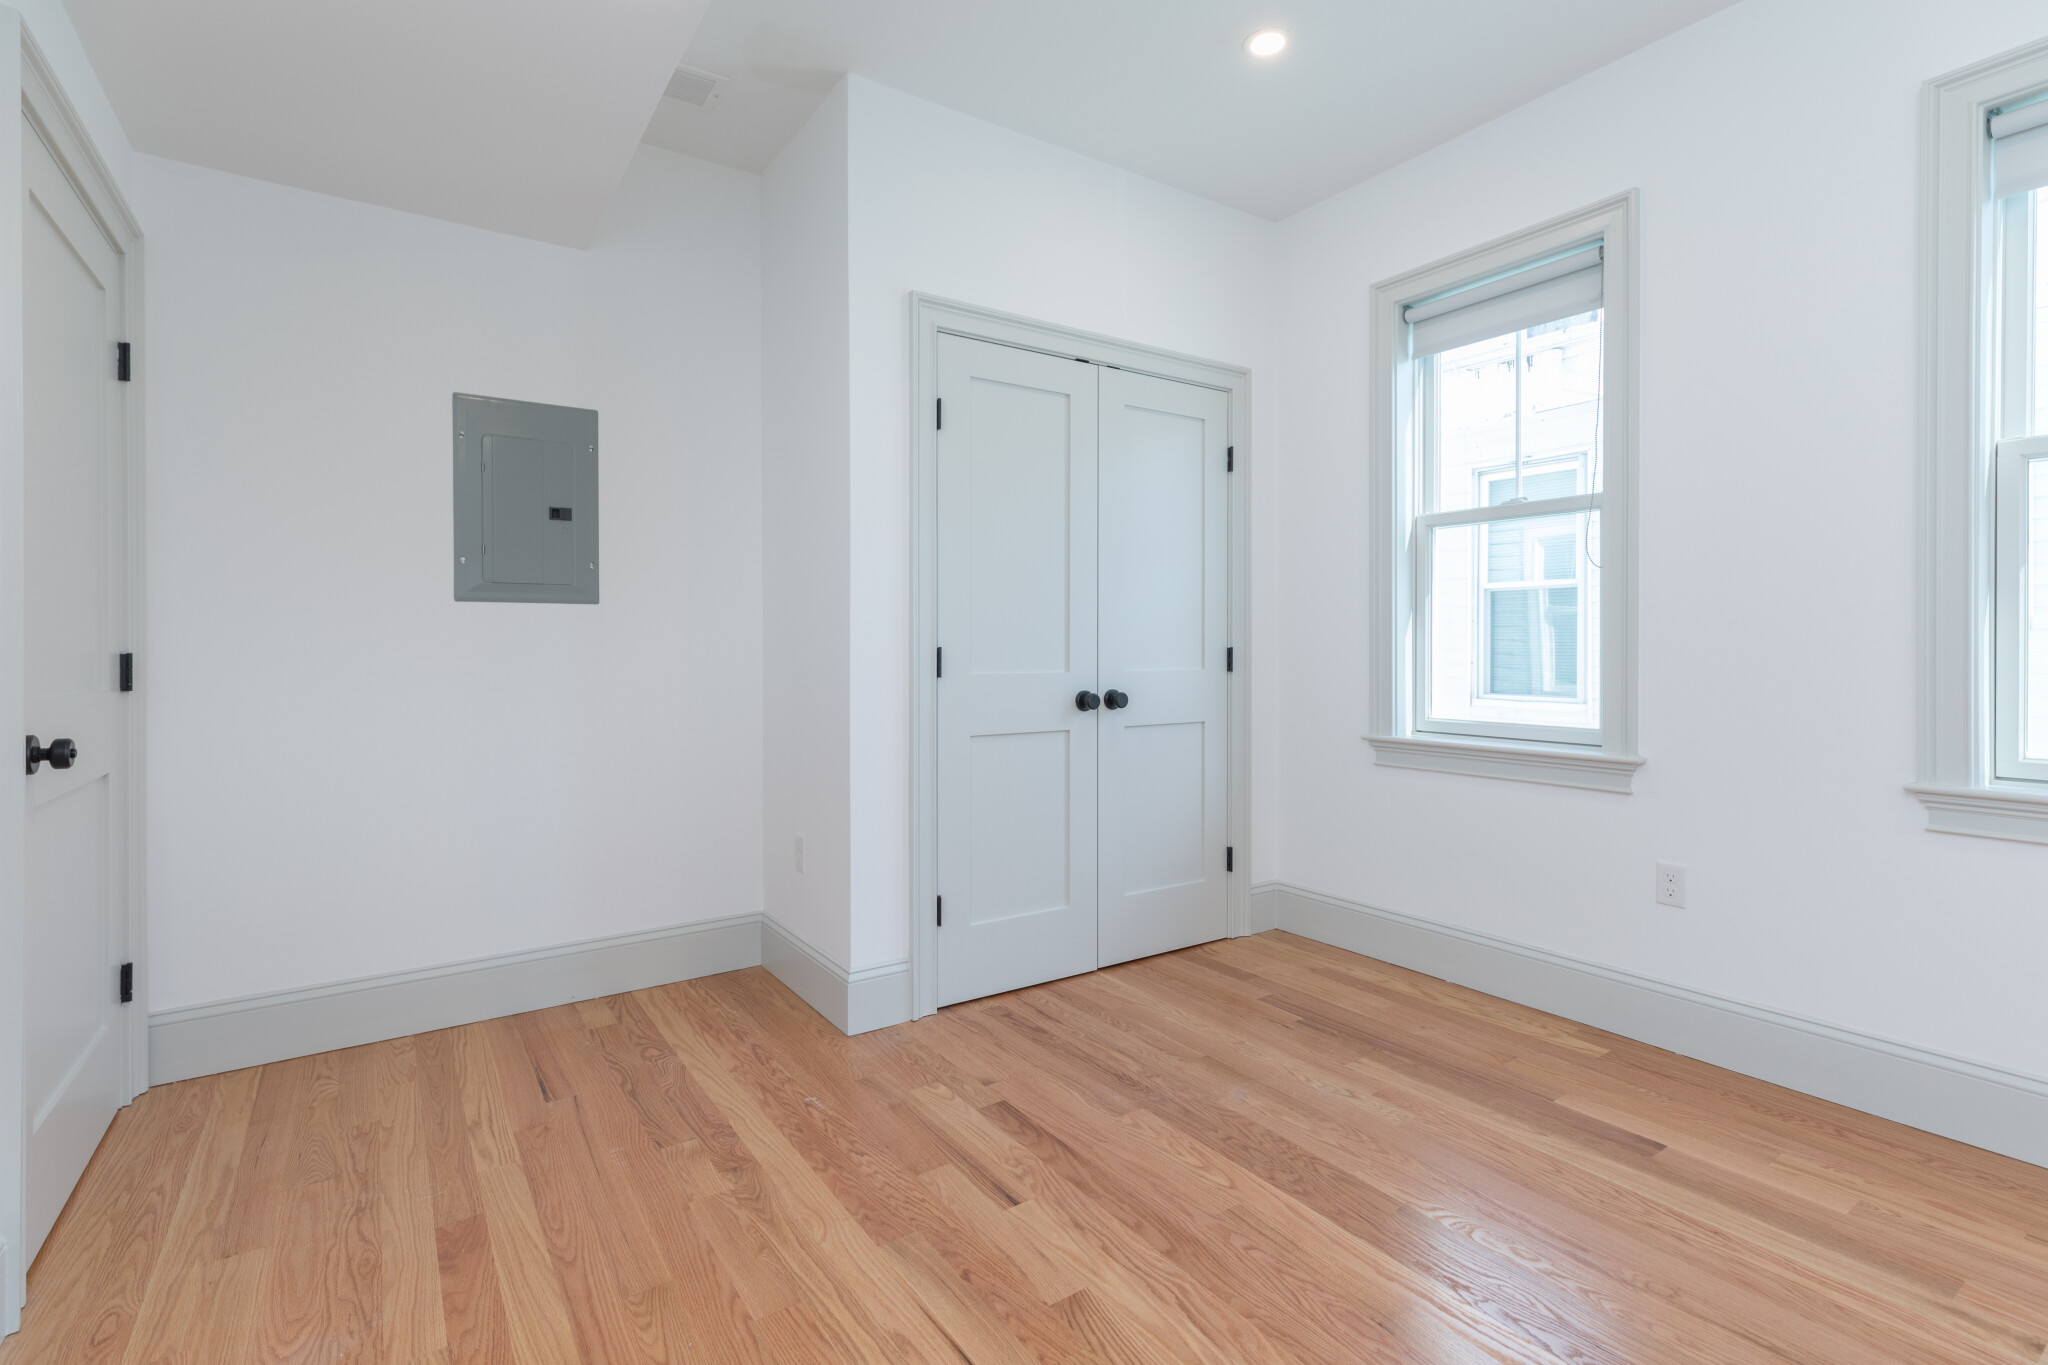 Photos of apartment on Church St.,Boston MA 02122